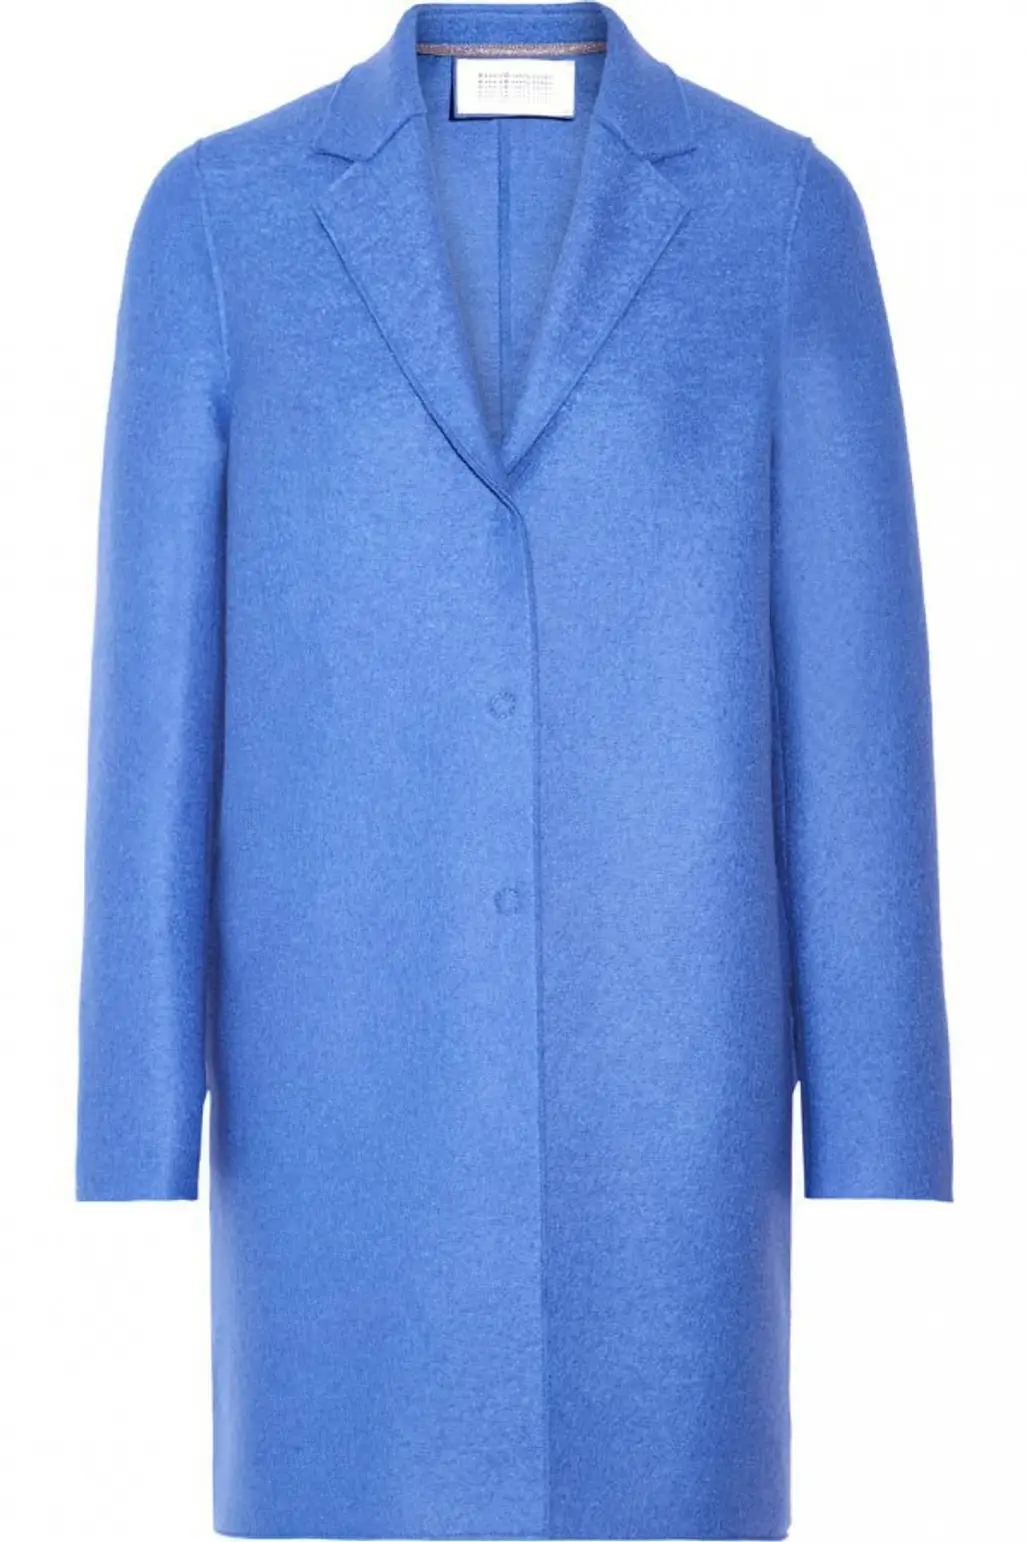 coat, blue, cobalt blue, electric blue, overcoat,